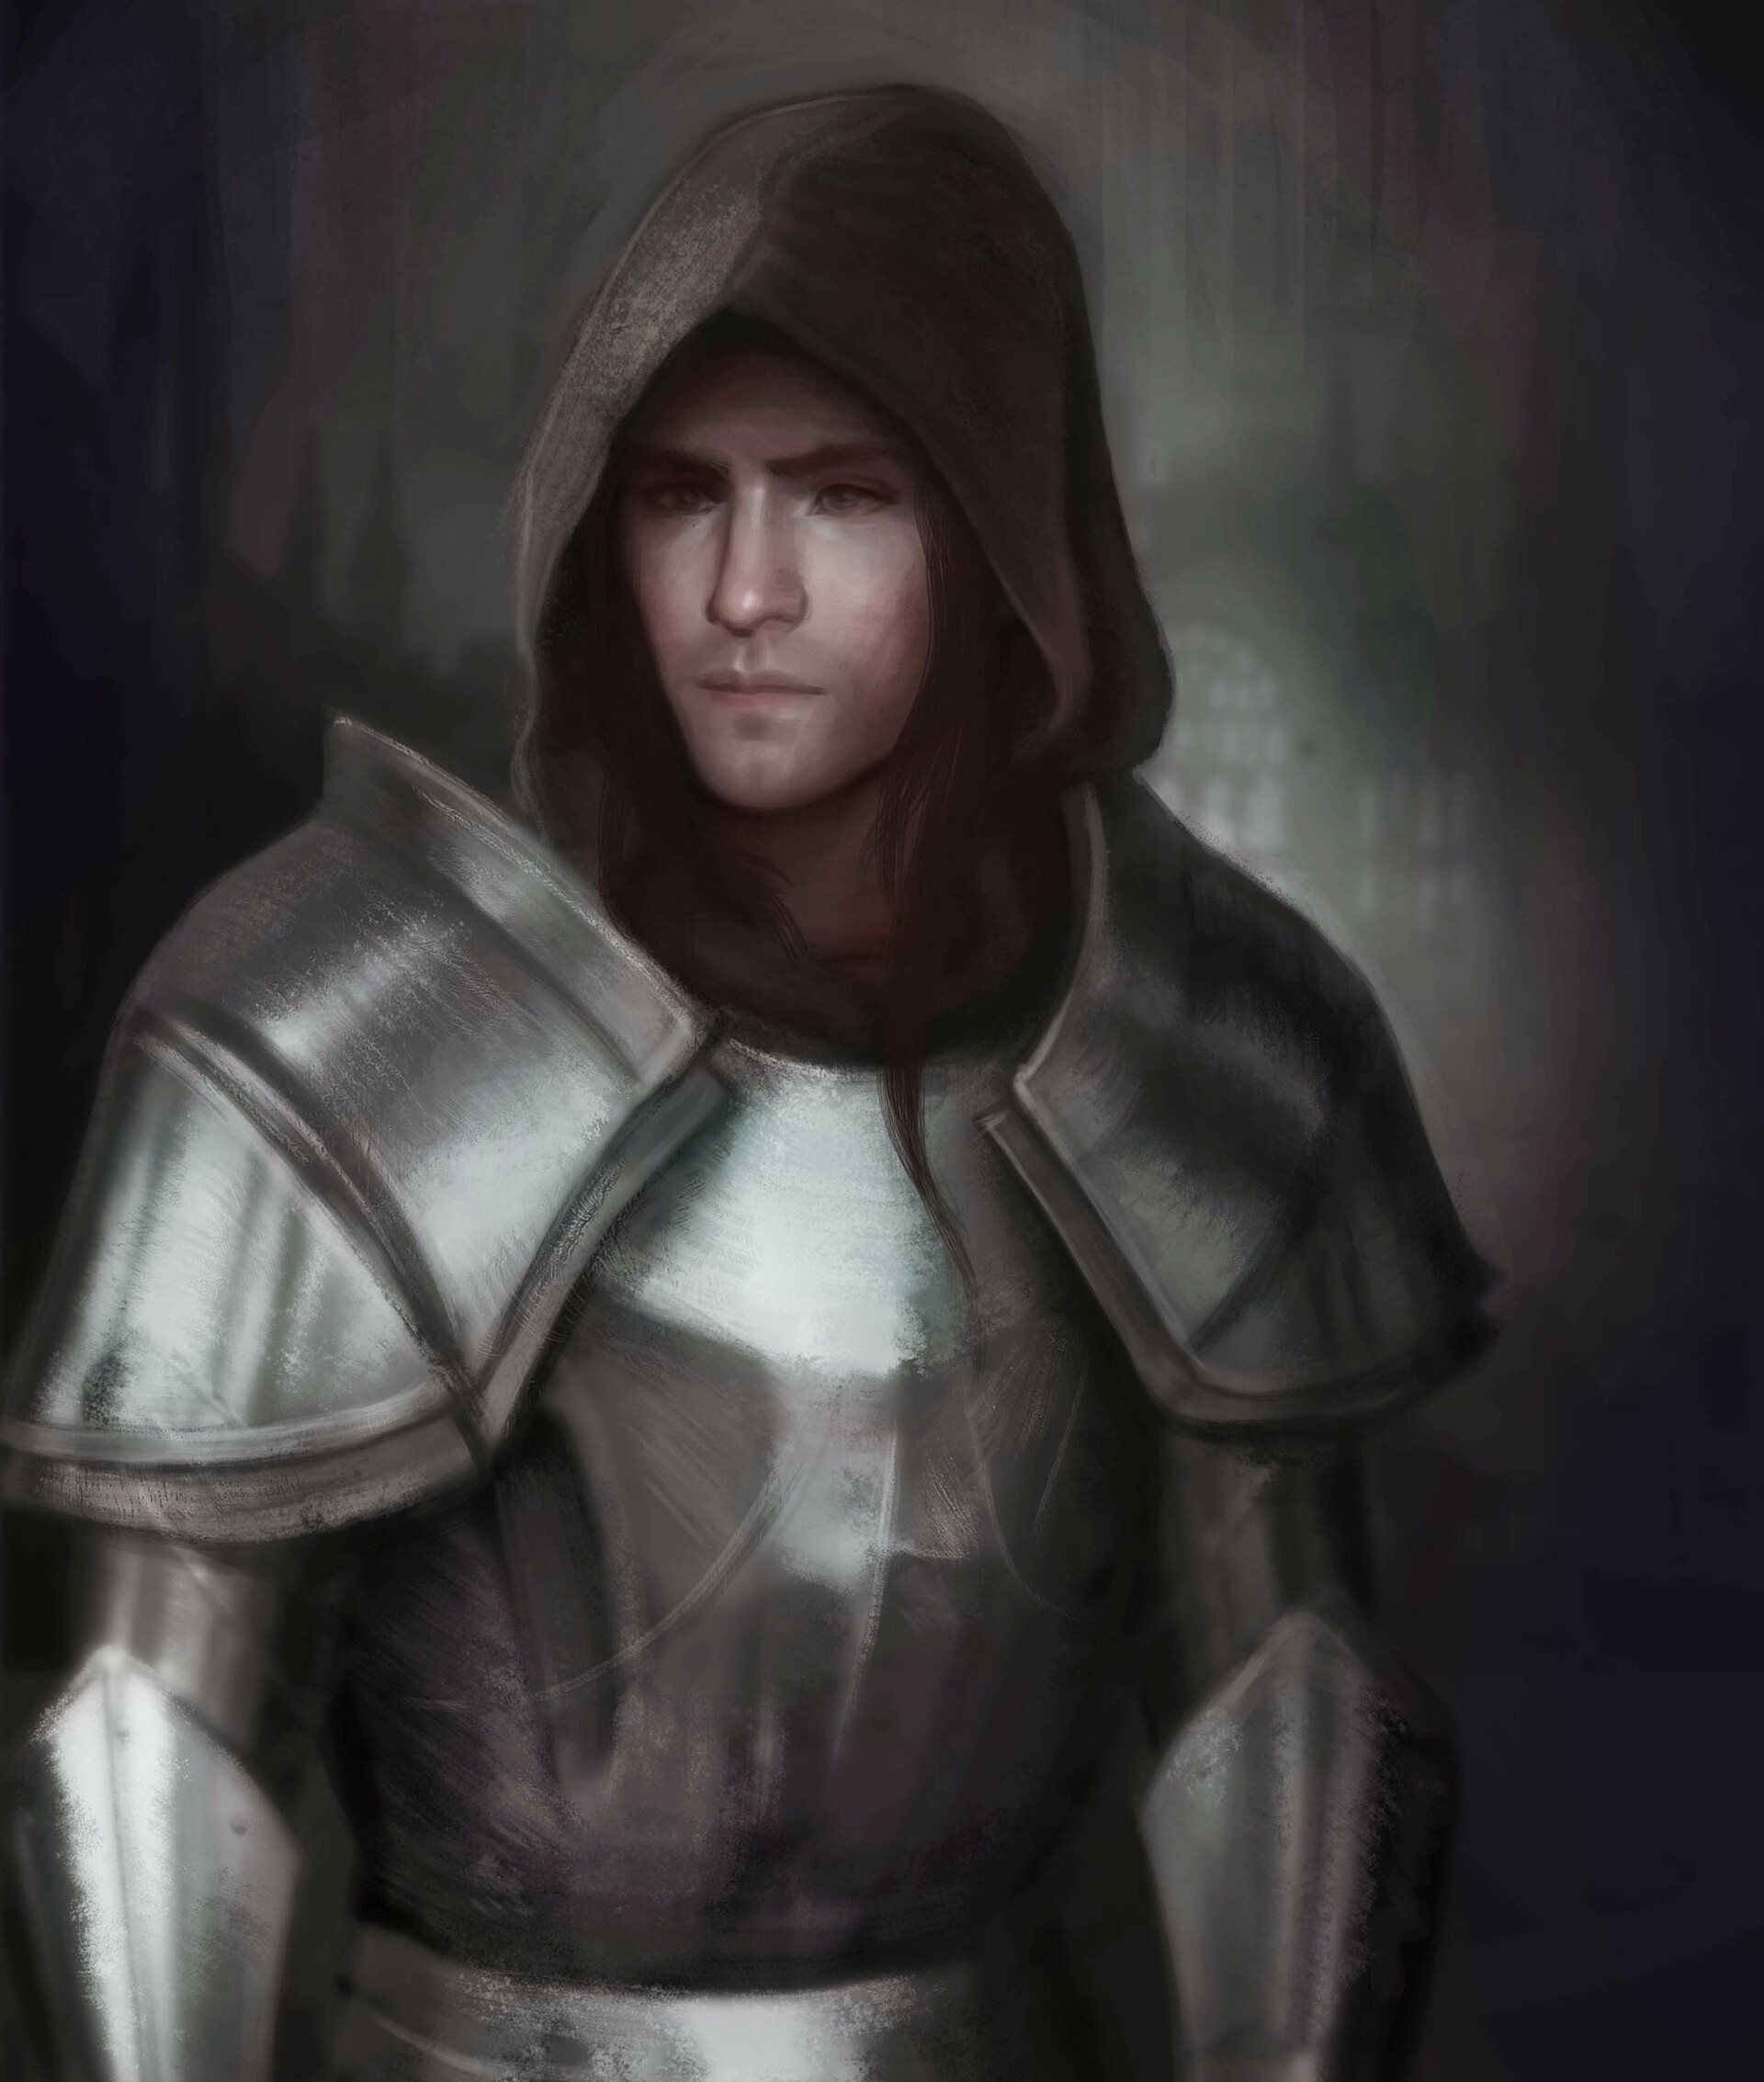 Male Knight Art